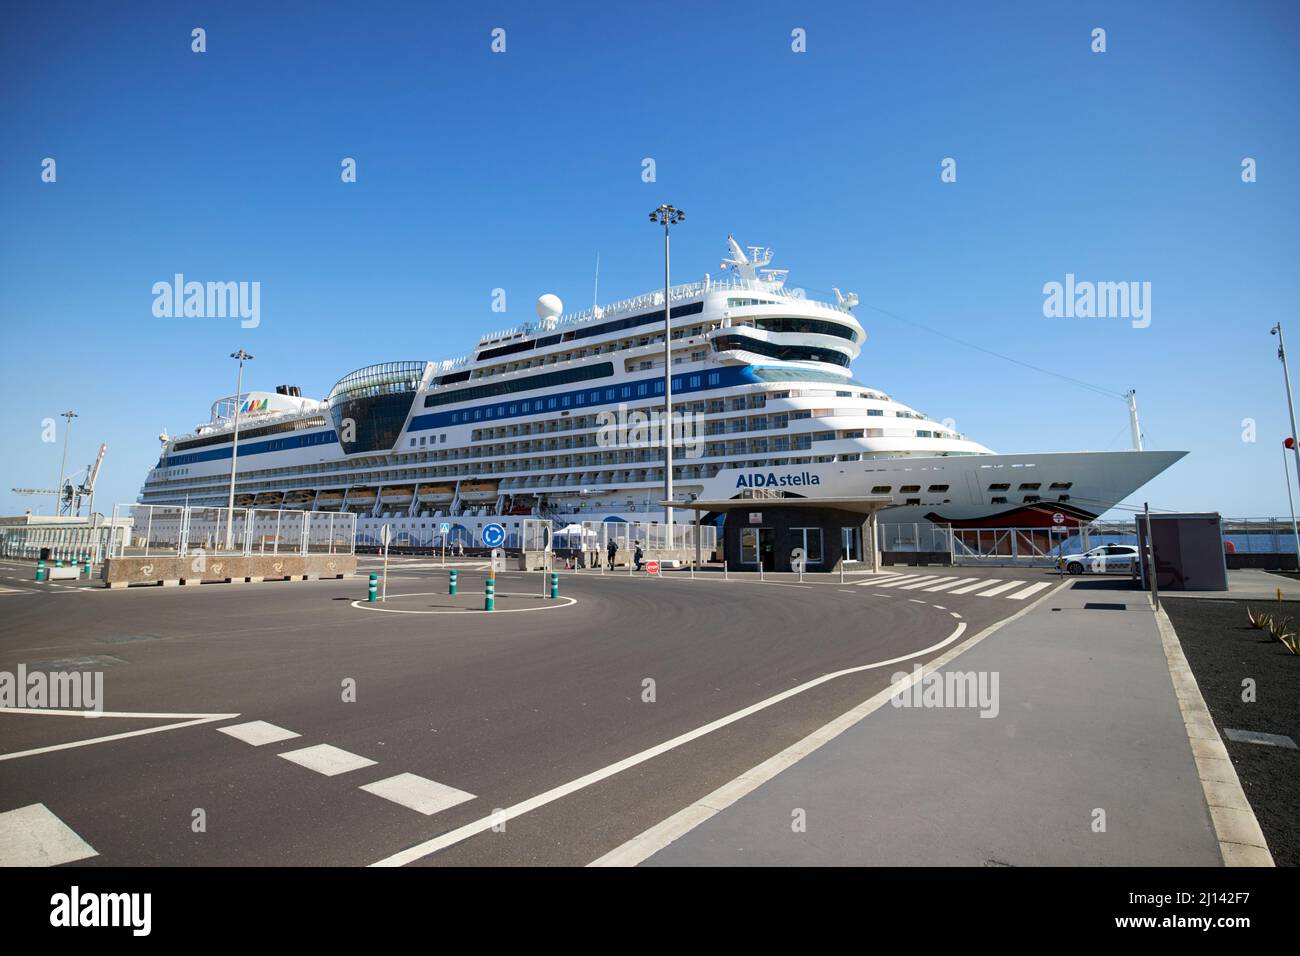 aida stella cruise ship berthed at arrecife lanzarote canary islands spain Stock Photo